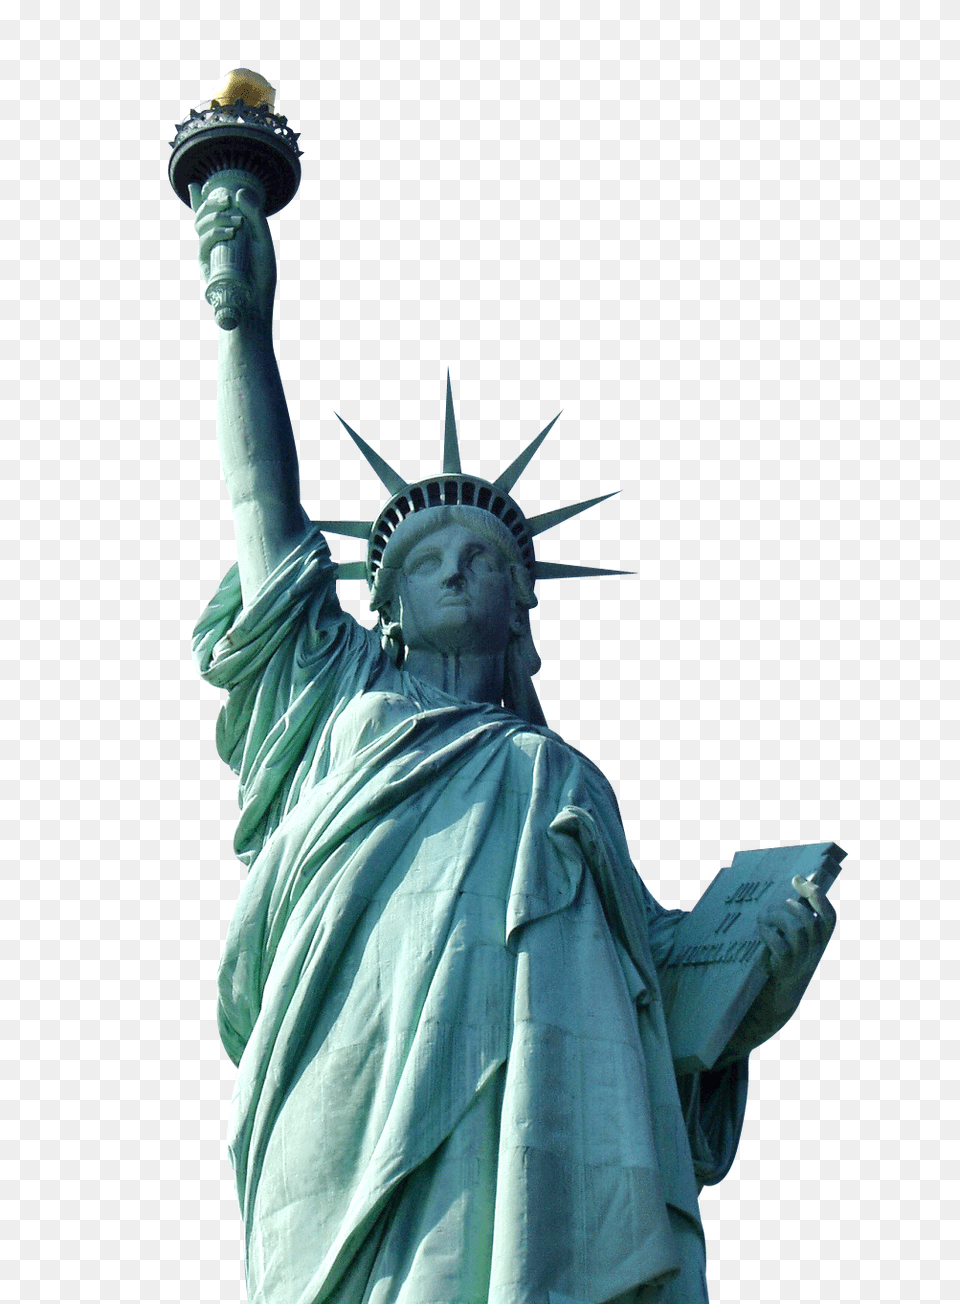 Pngpix Com Statue Of Liberty Transparent Image, Art, Adult, Person, Man Free Png Download